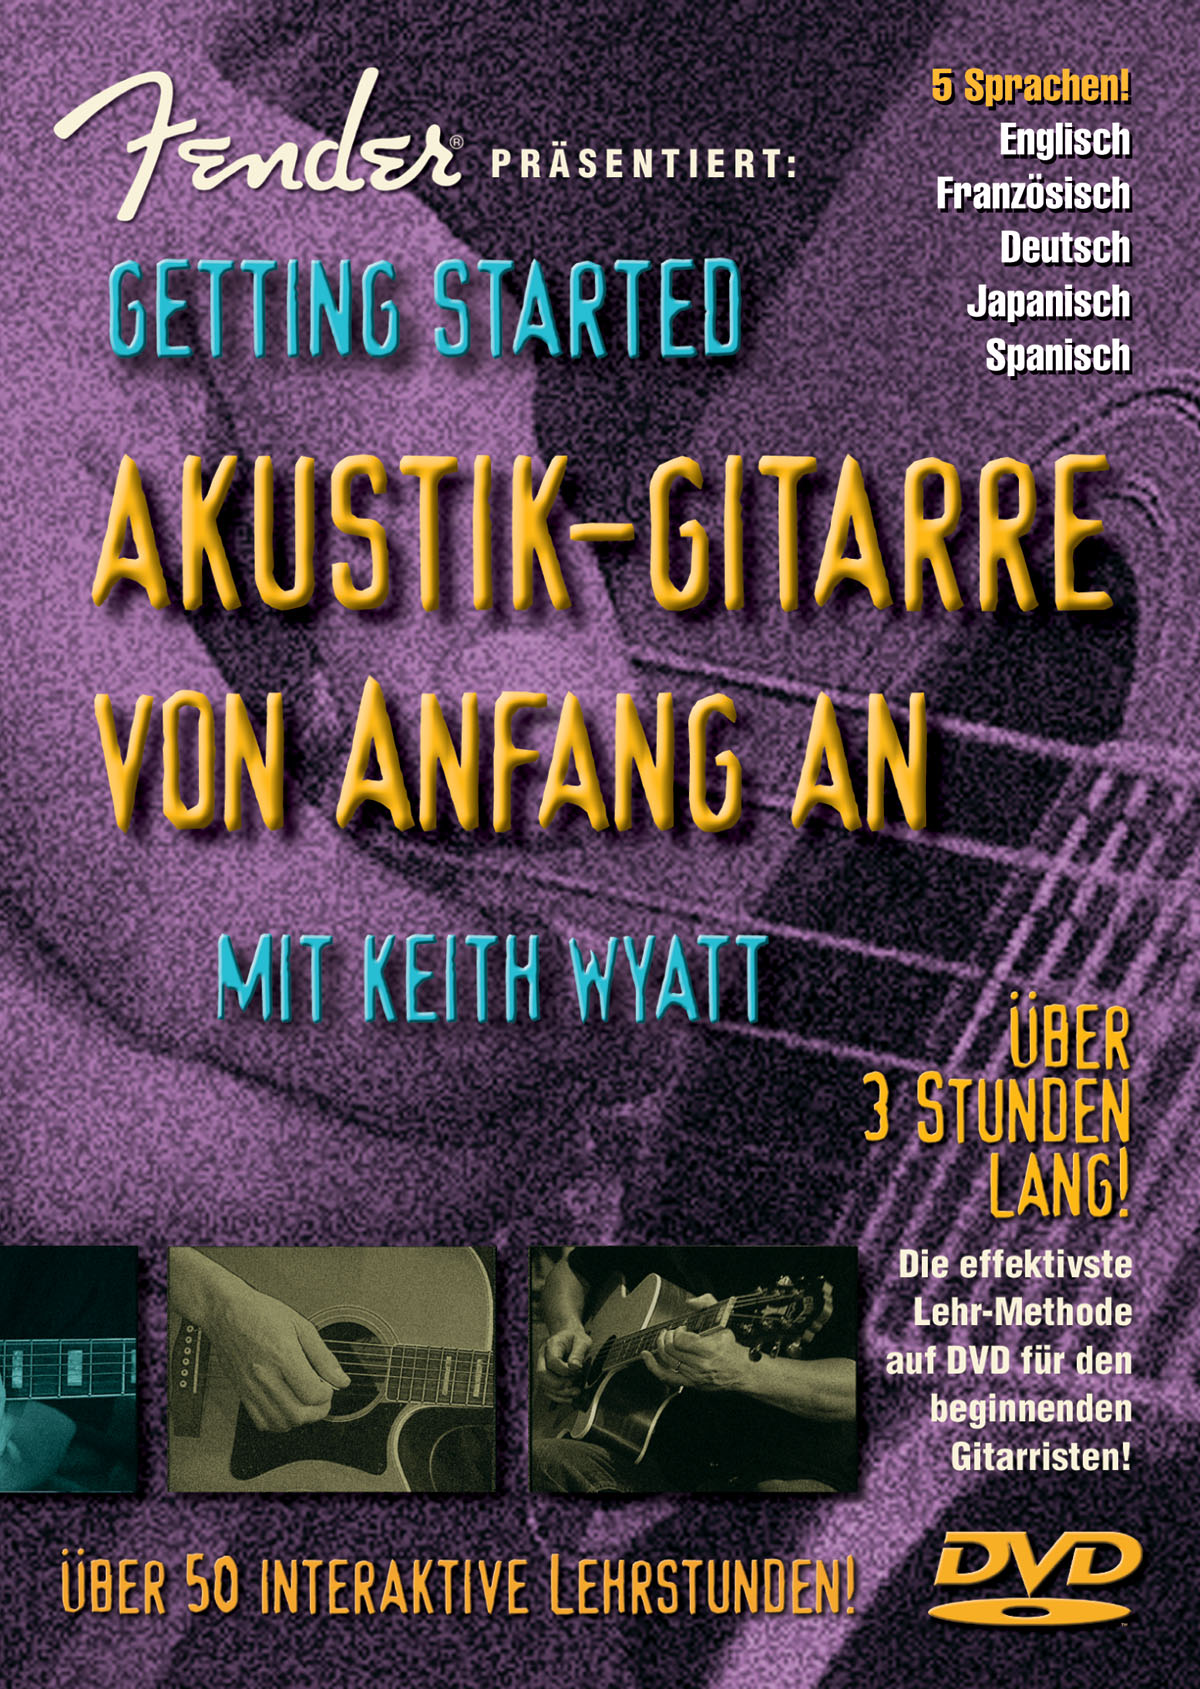 Keith Wyatt: Fender Prsentiert: Akustik-Gitarre Von Anfang An: Guitar Solo: